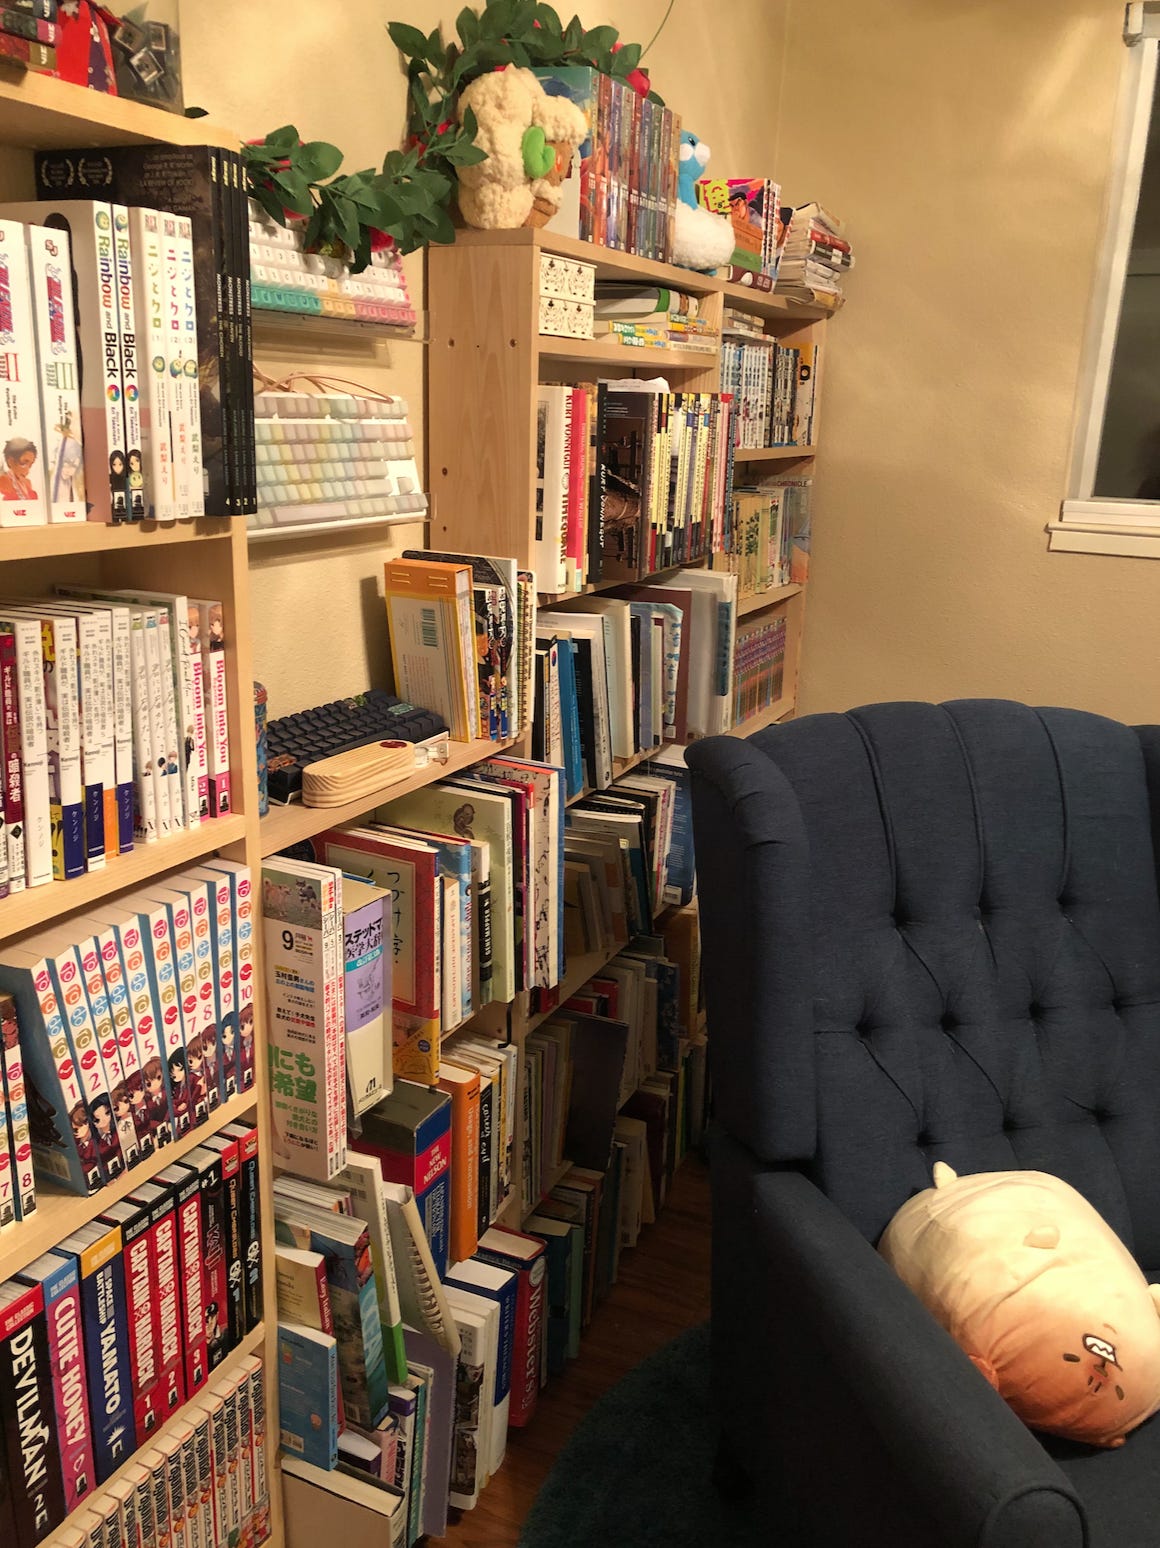 More bookshelves and more books